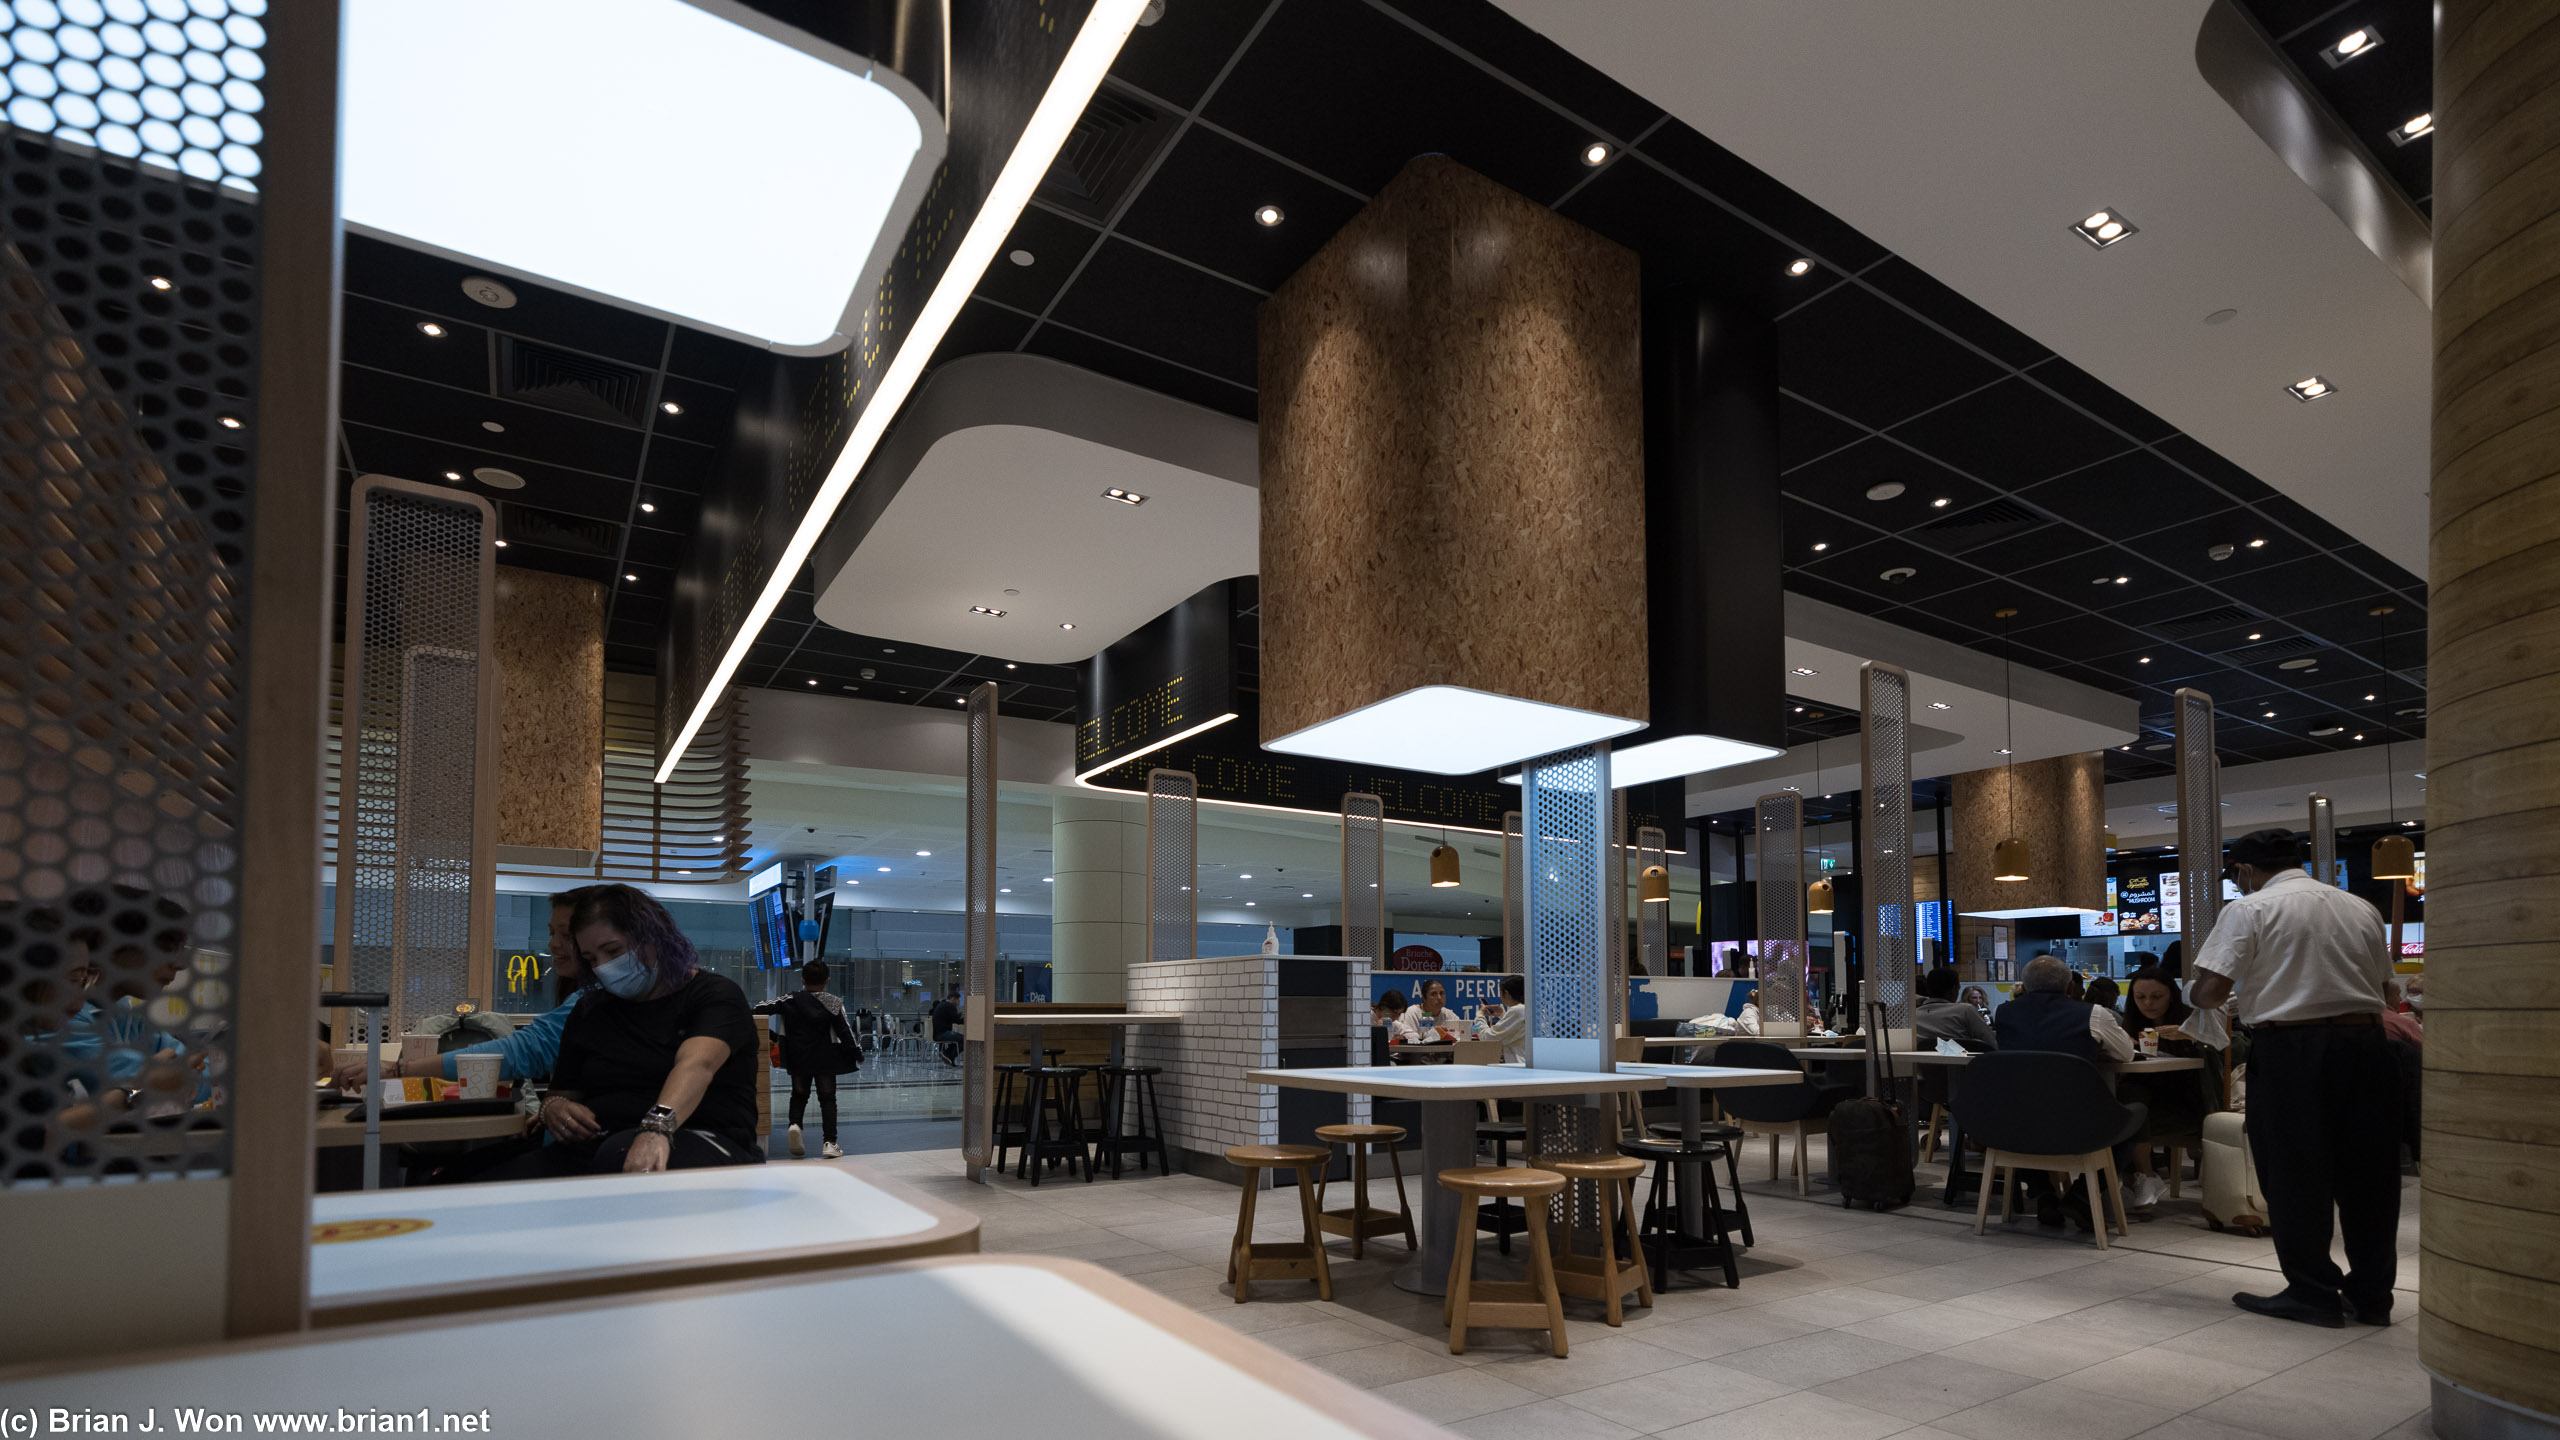 Of course a McDonald's in Dubai looks upscale.